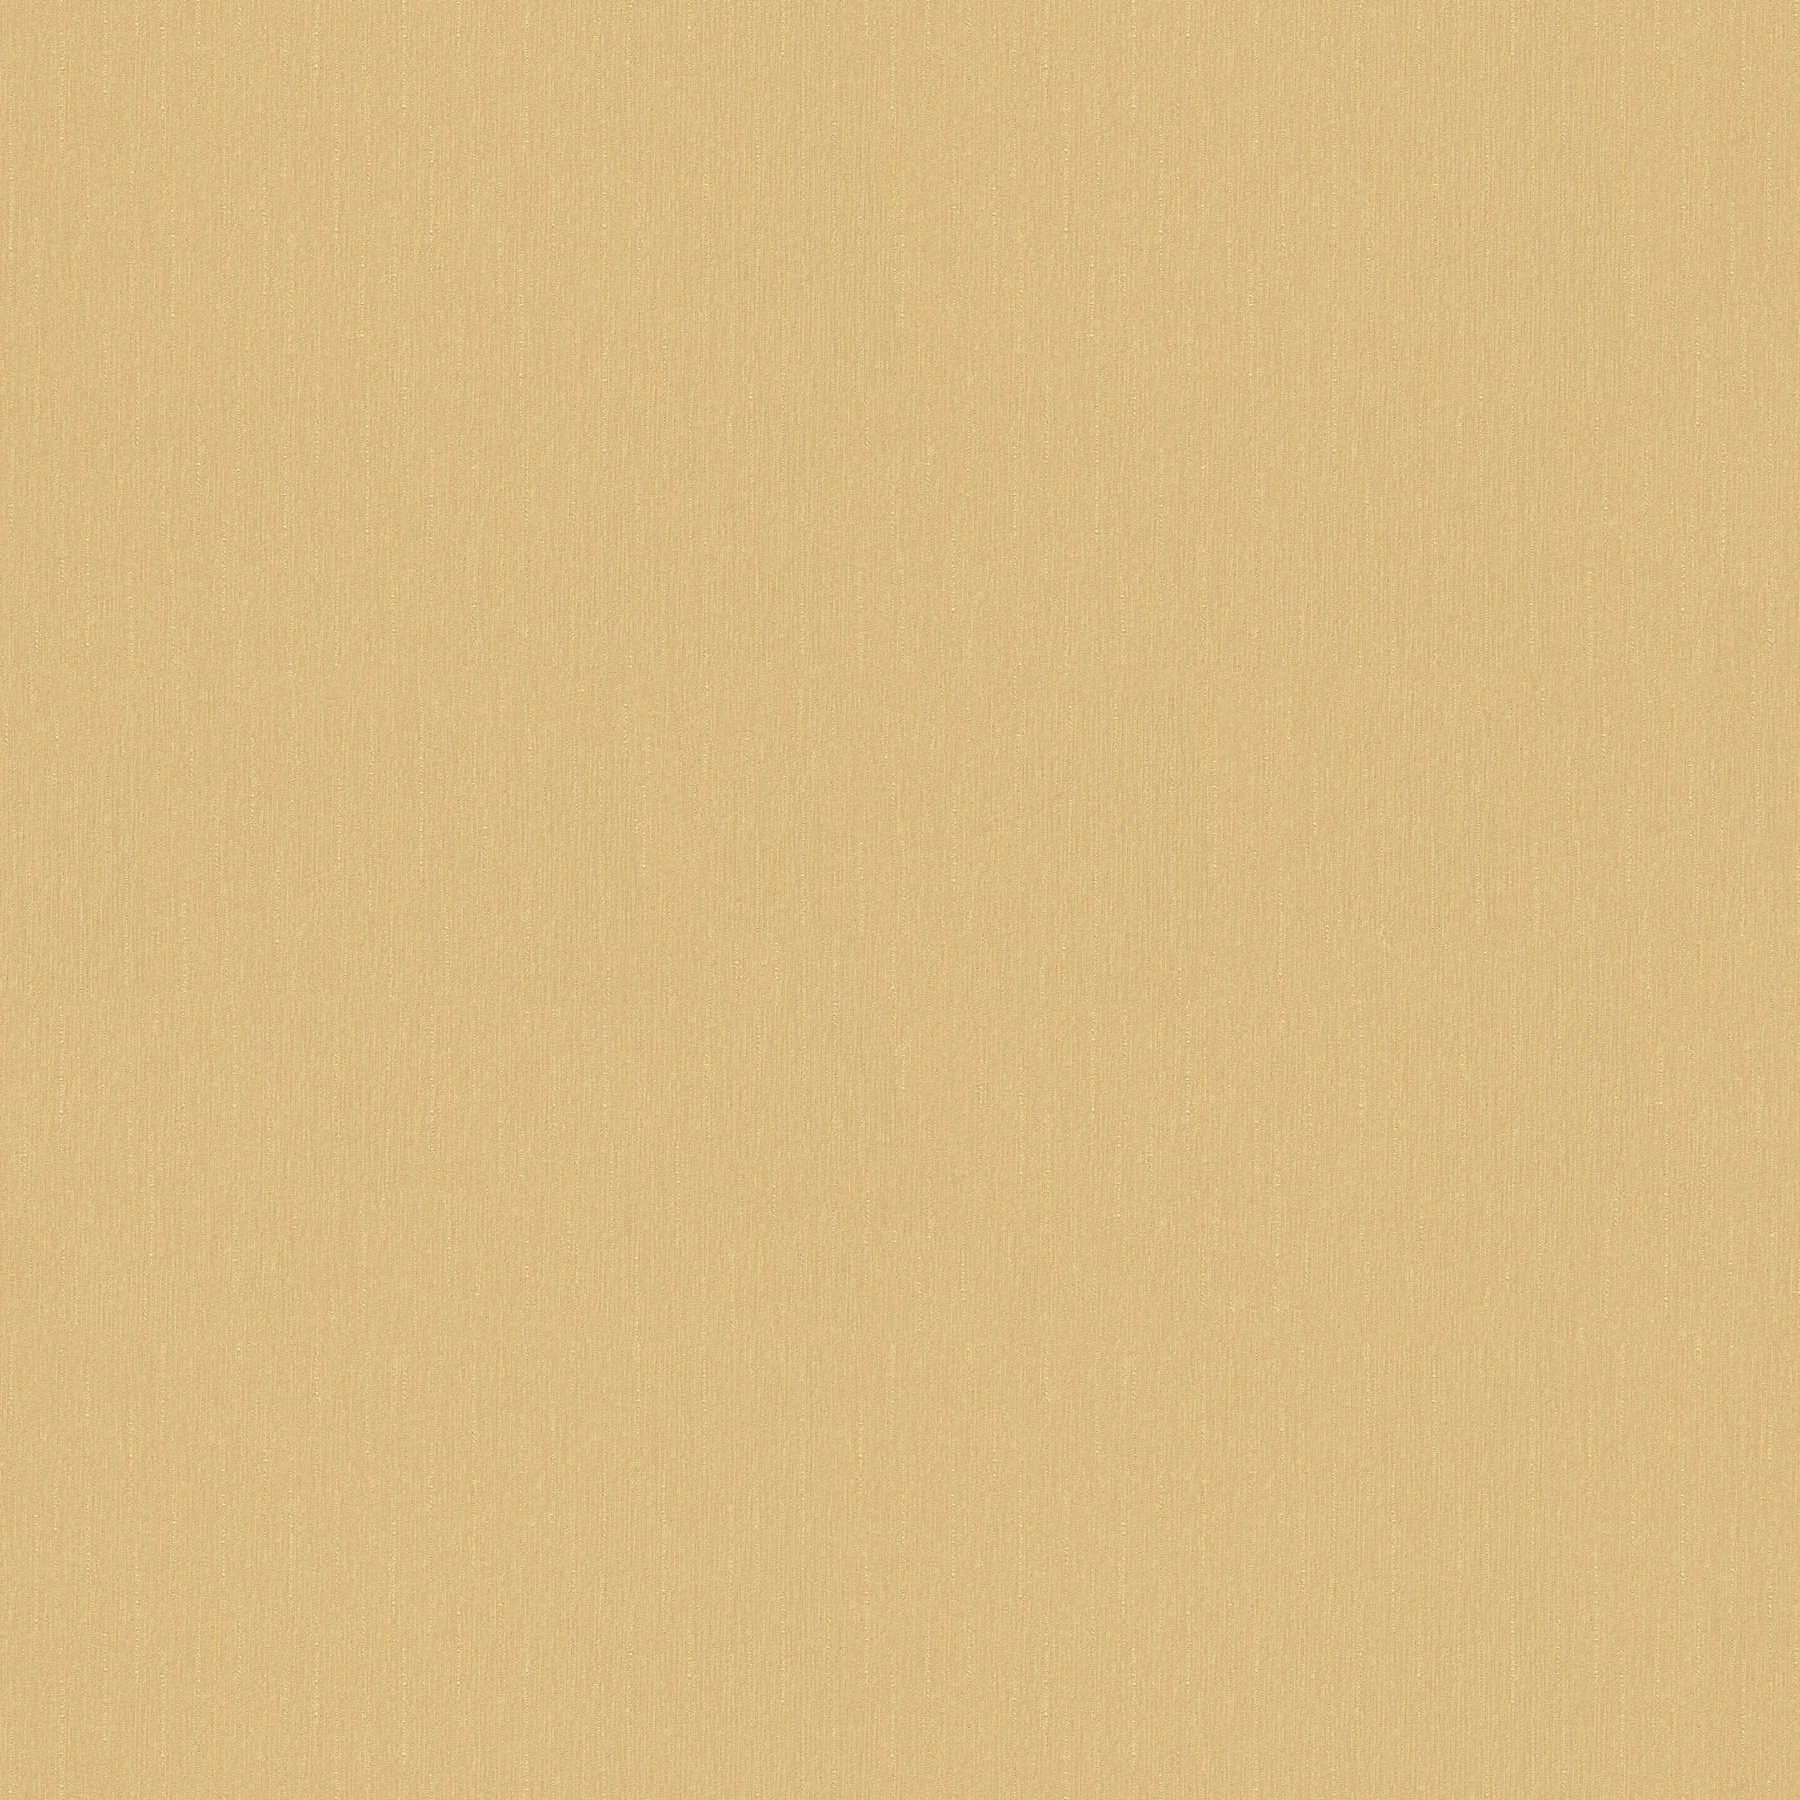 Golden plain wallpaper with fine glitter threads - gold, cream
